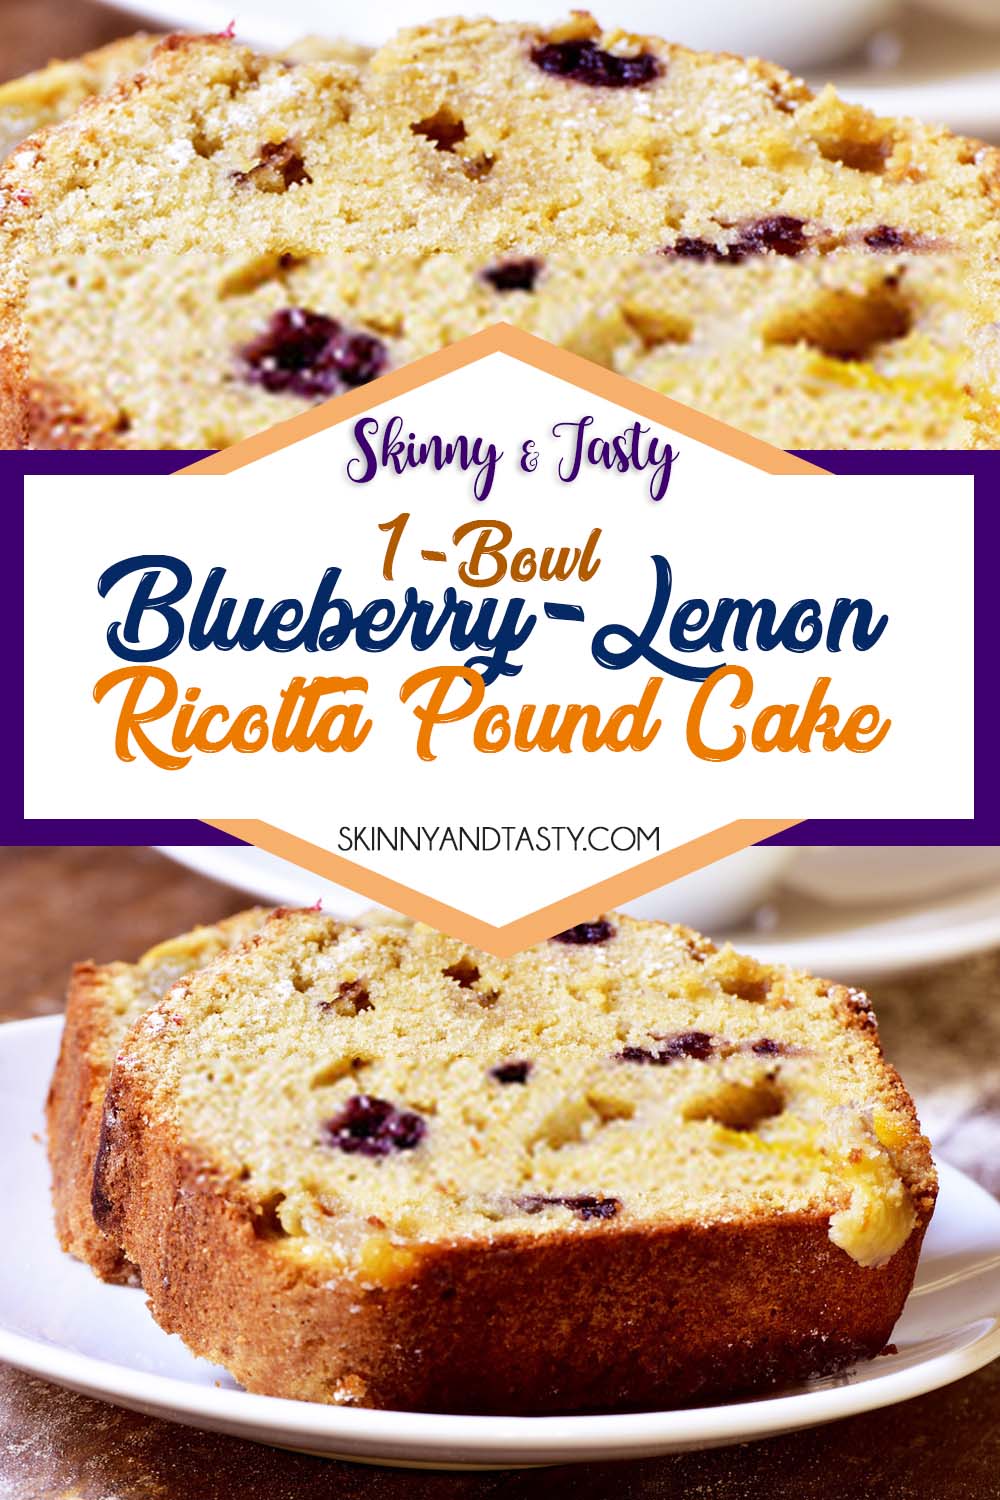 1-Bowl Blueberry-Lemon Ricotta Pound Cake